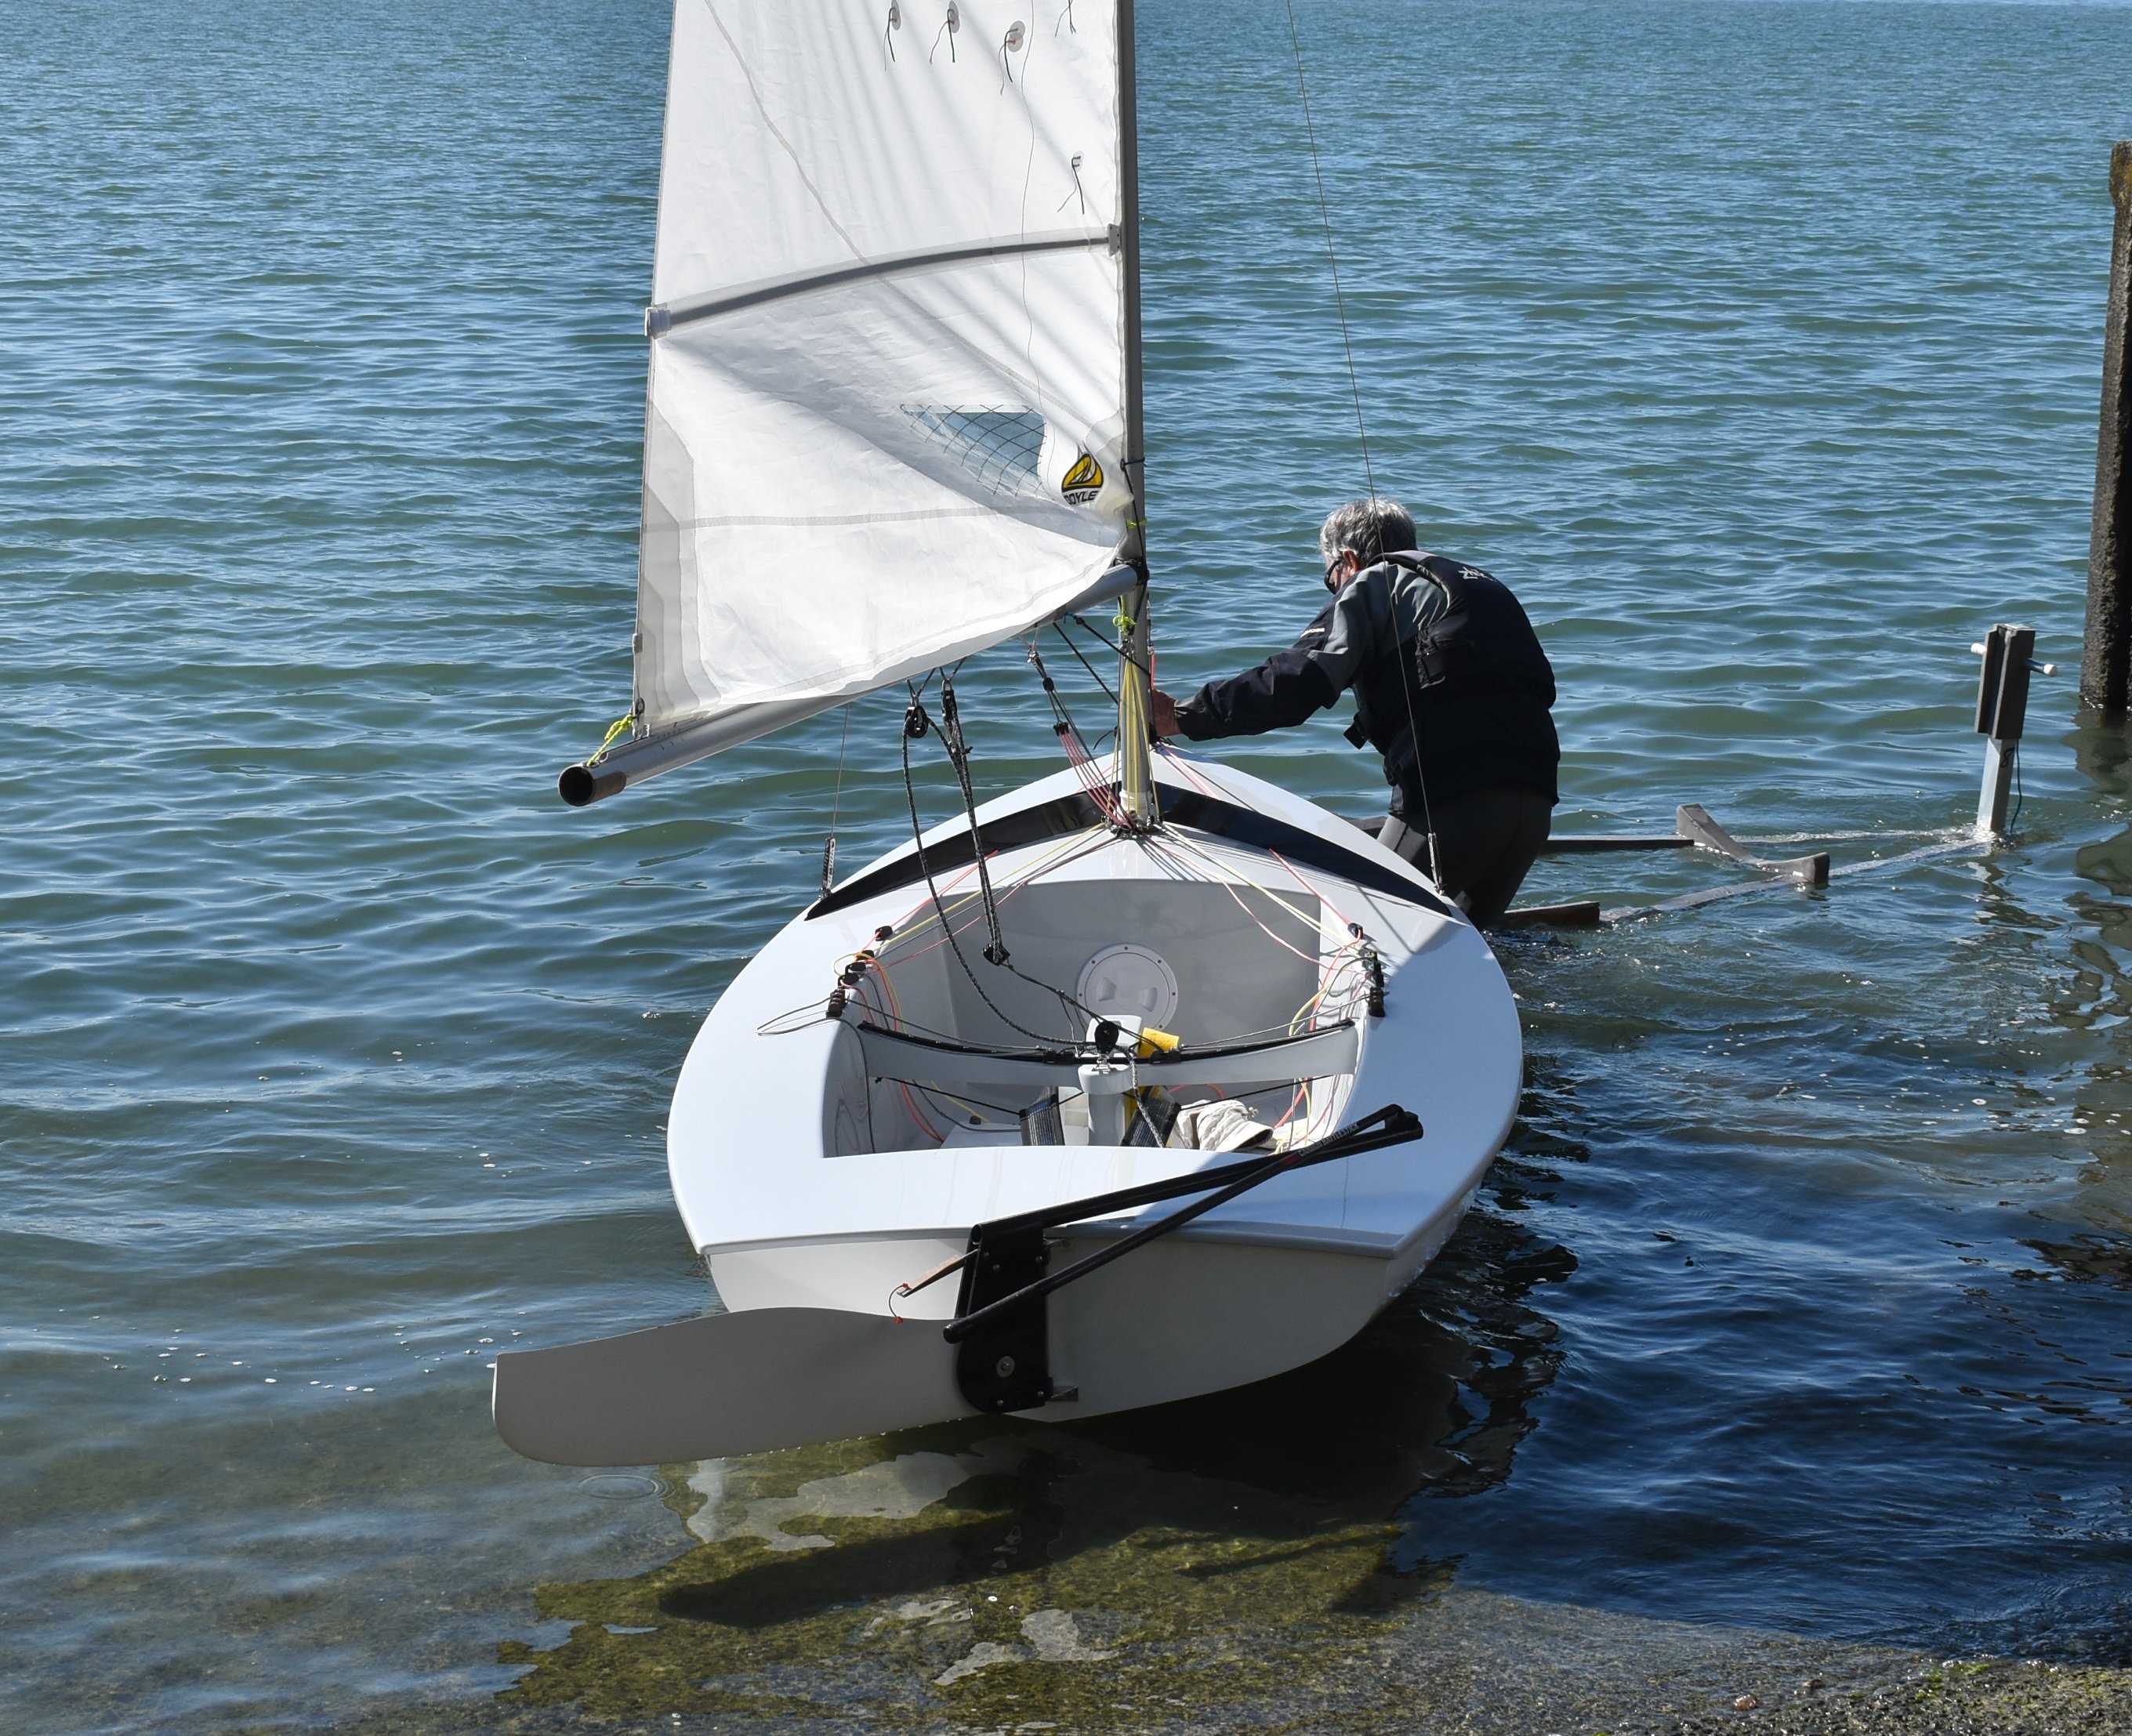 zephyr class sailboat